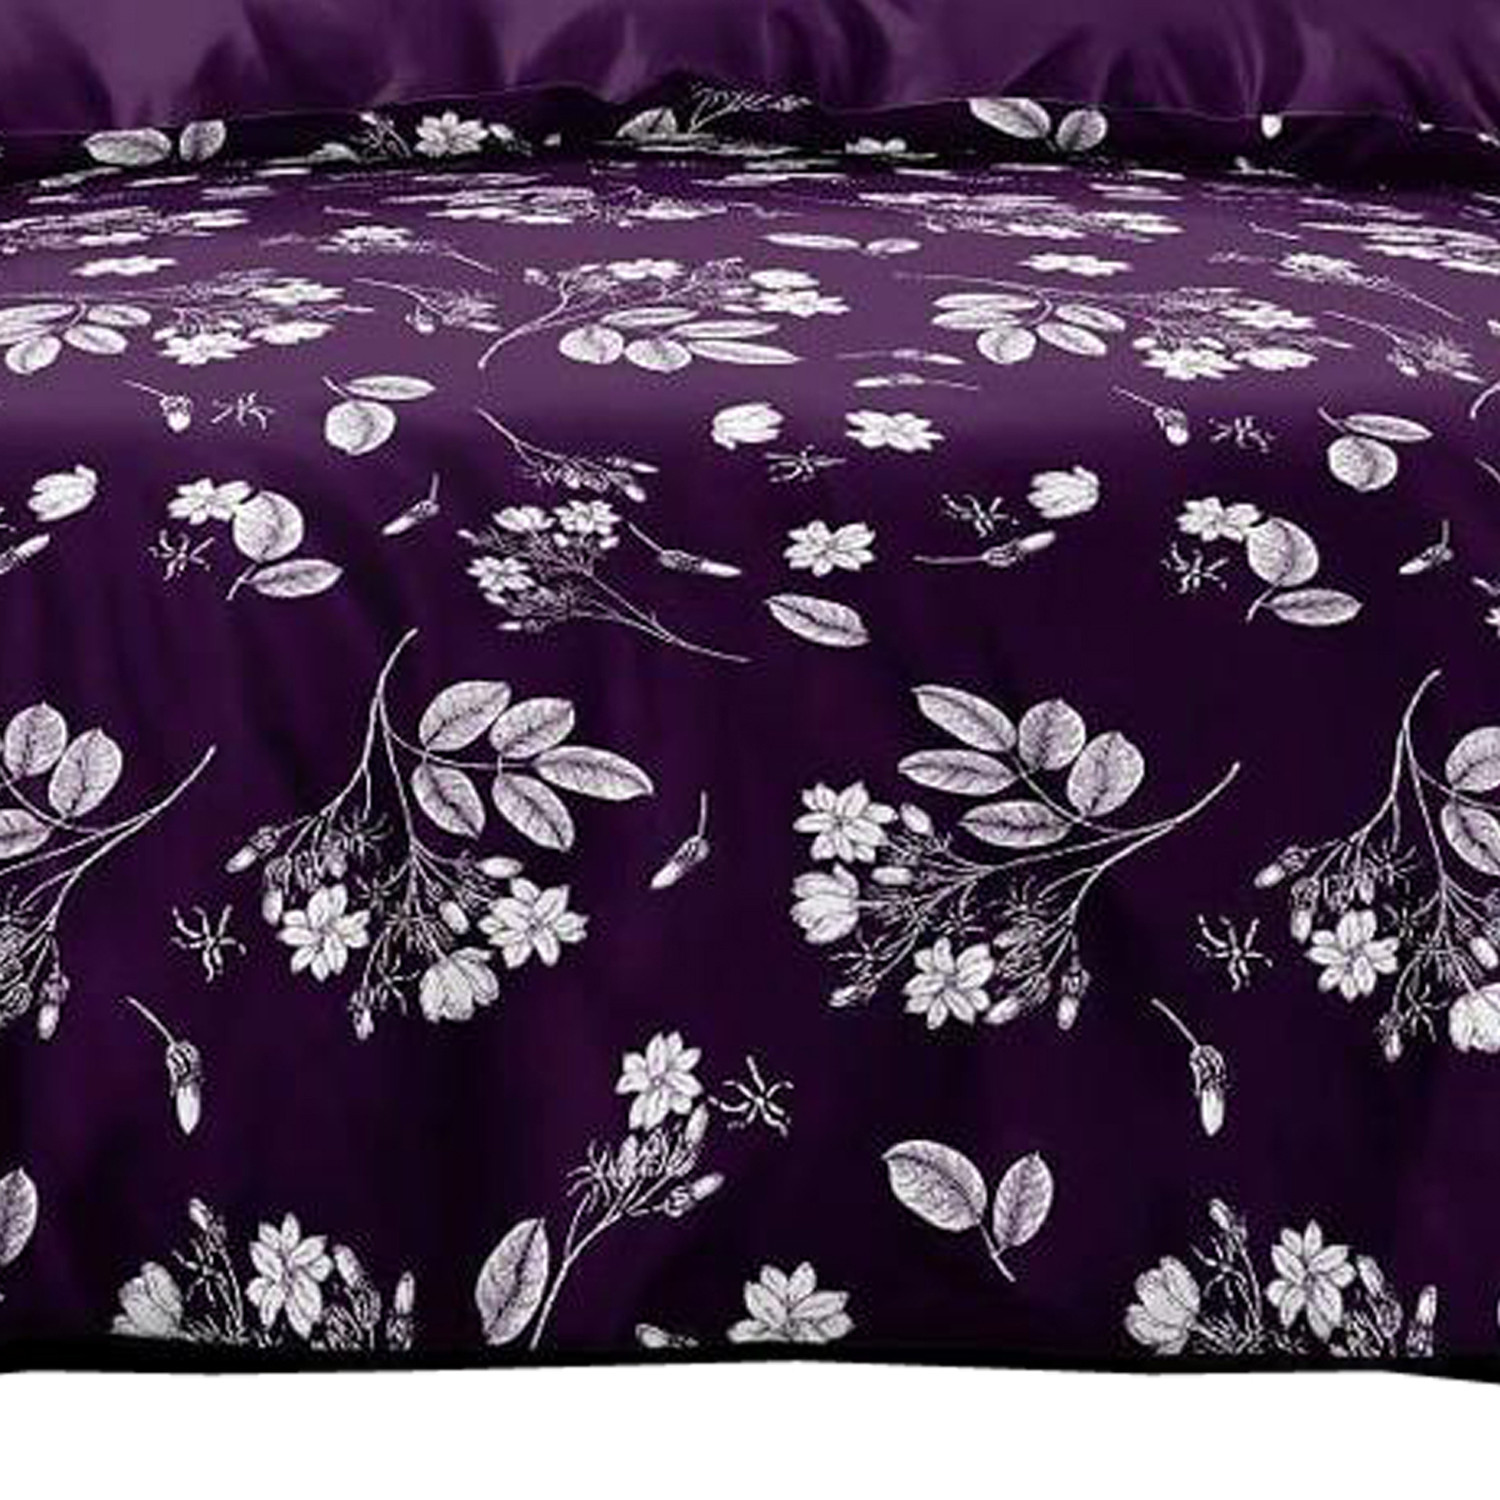 Kuber Industries Floral Print Microfibre Reversible Comforter, Double,150 GSM(Purple)